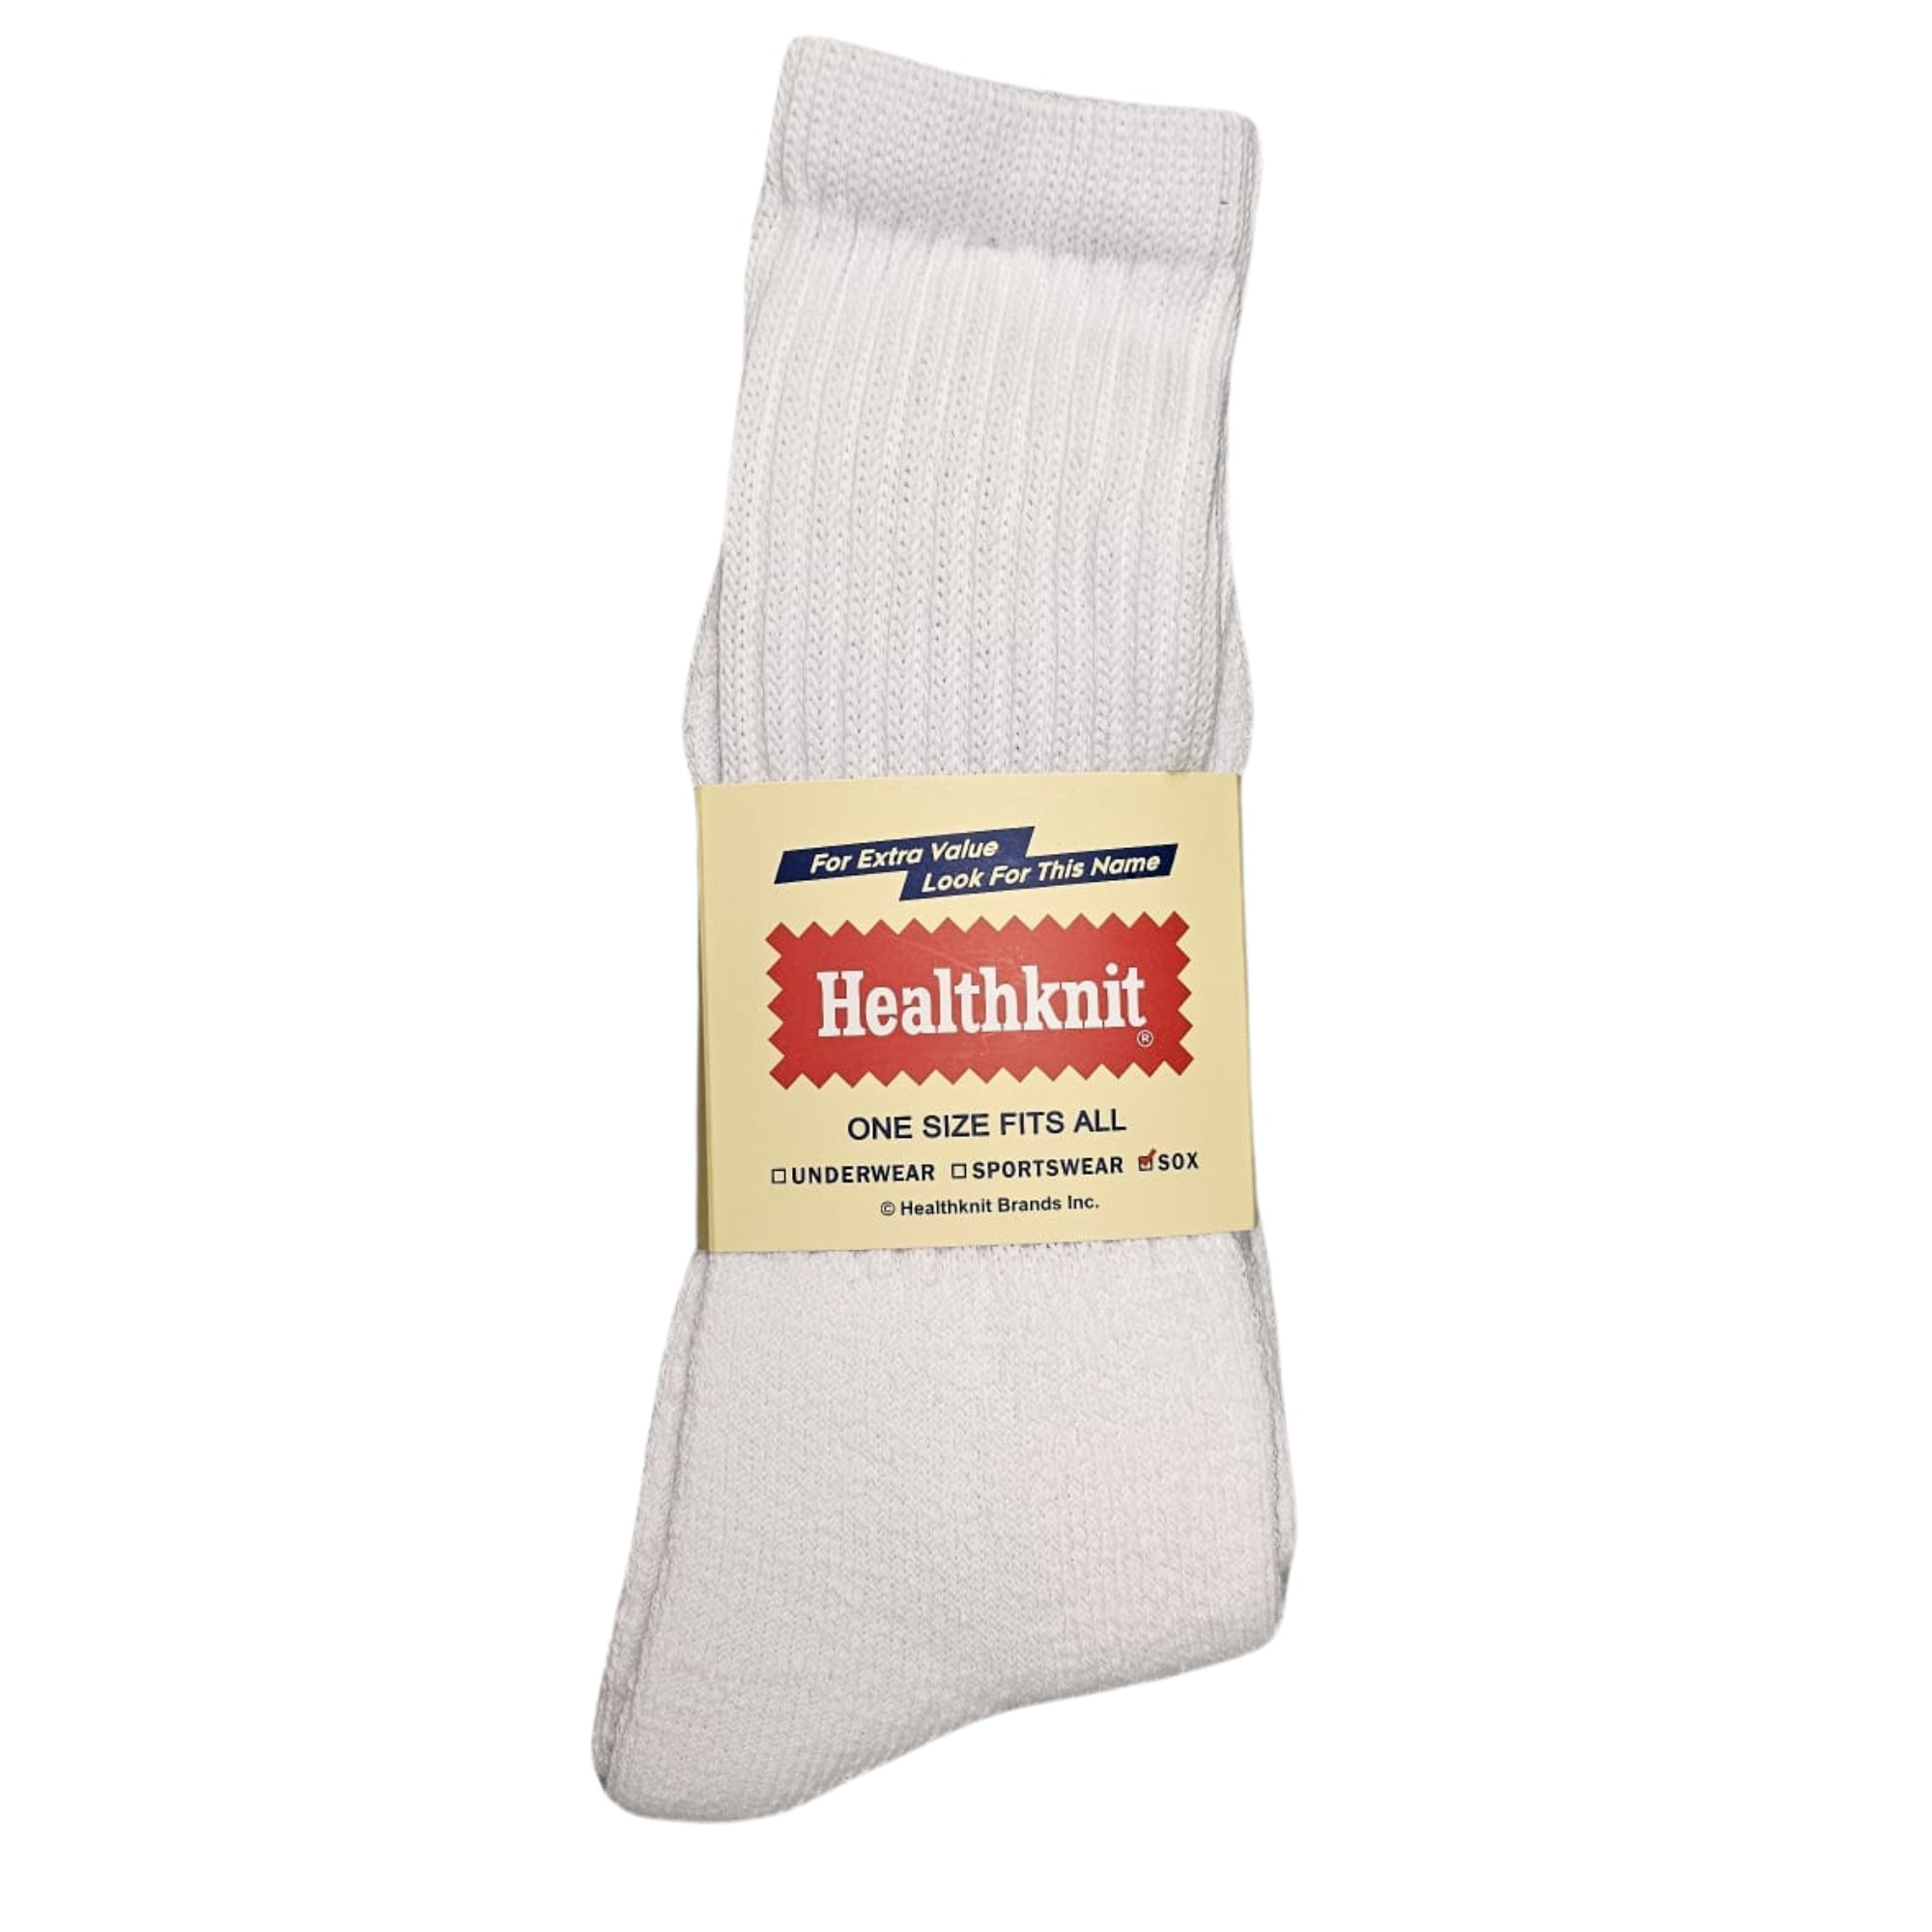 Healthknit Socks 3 Pack in White